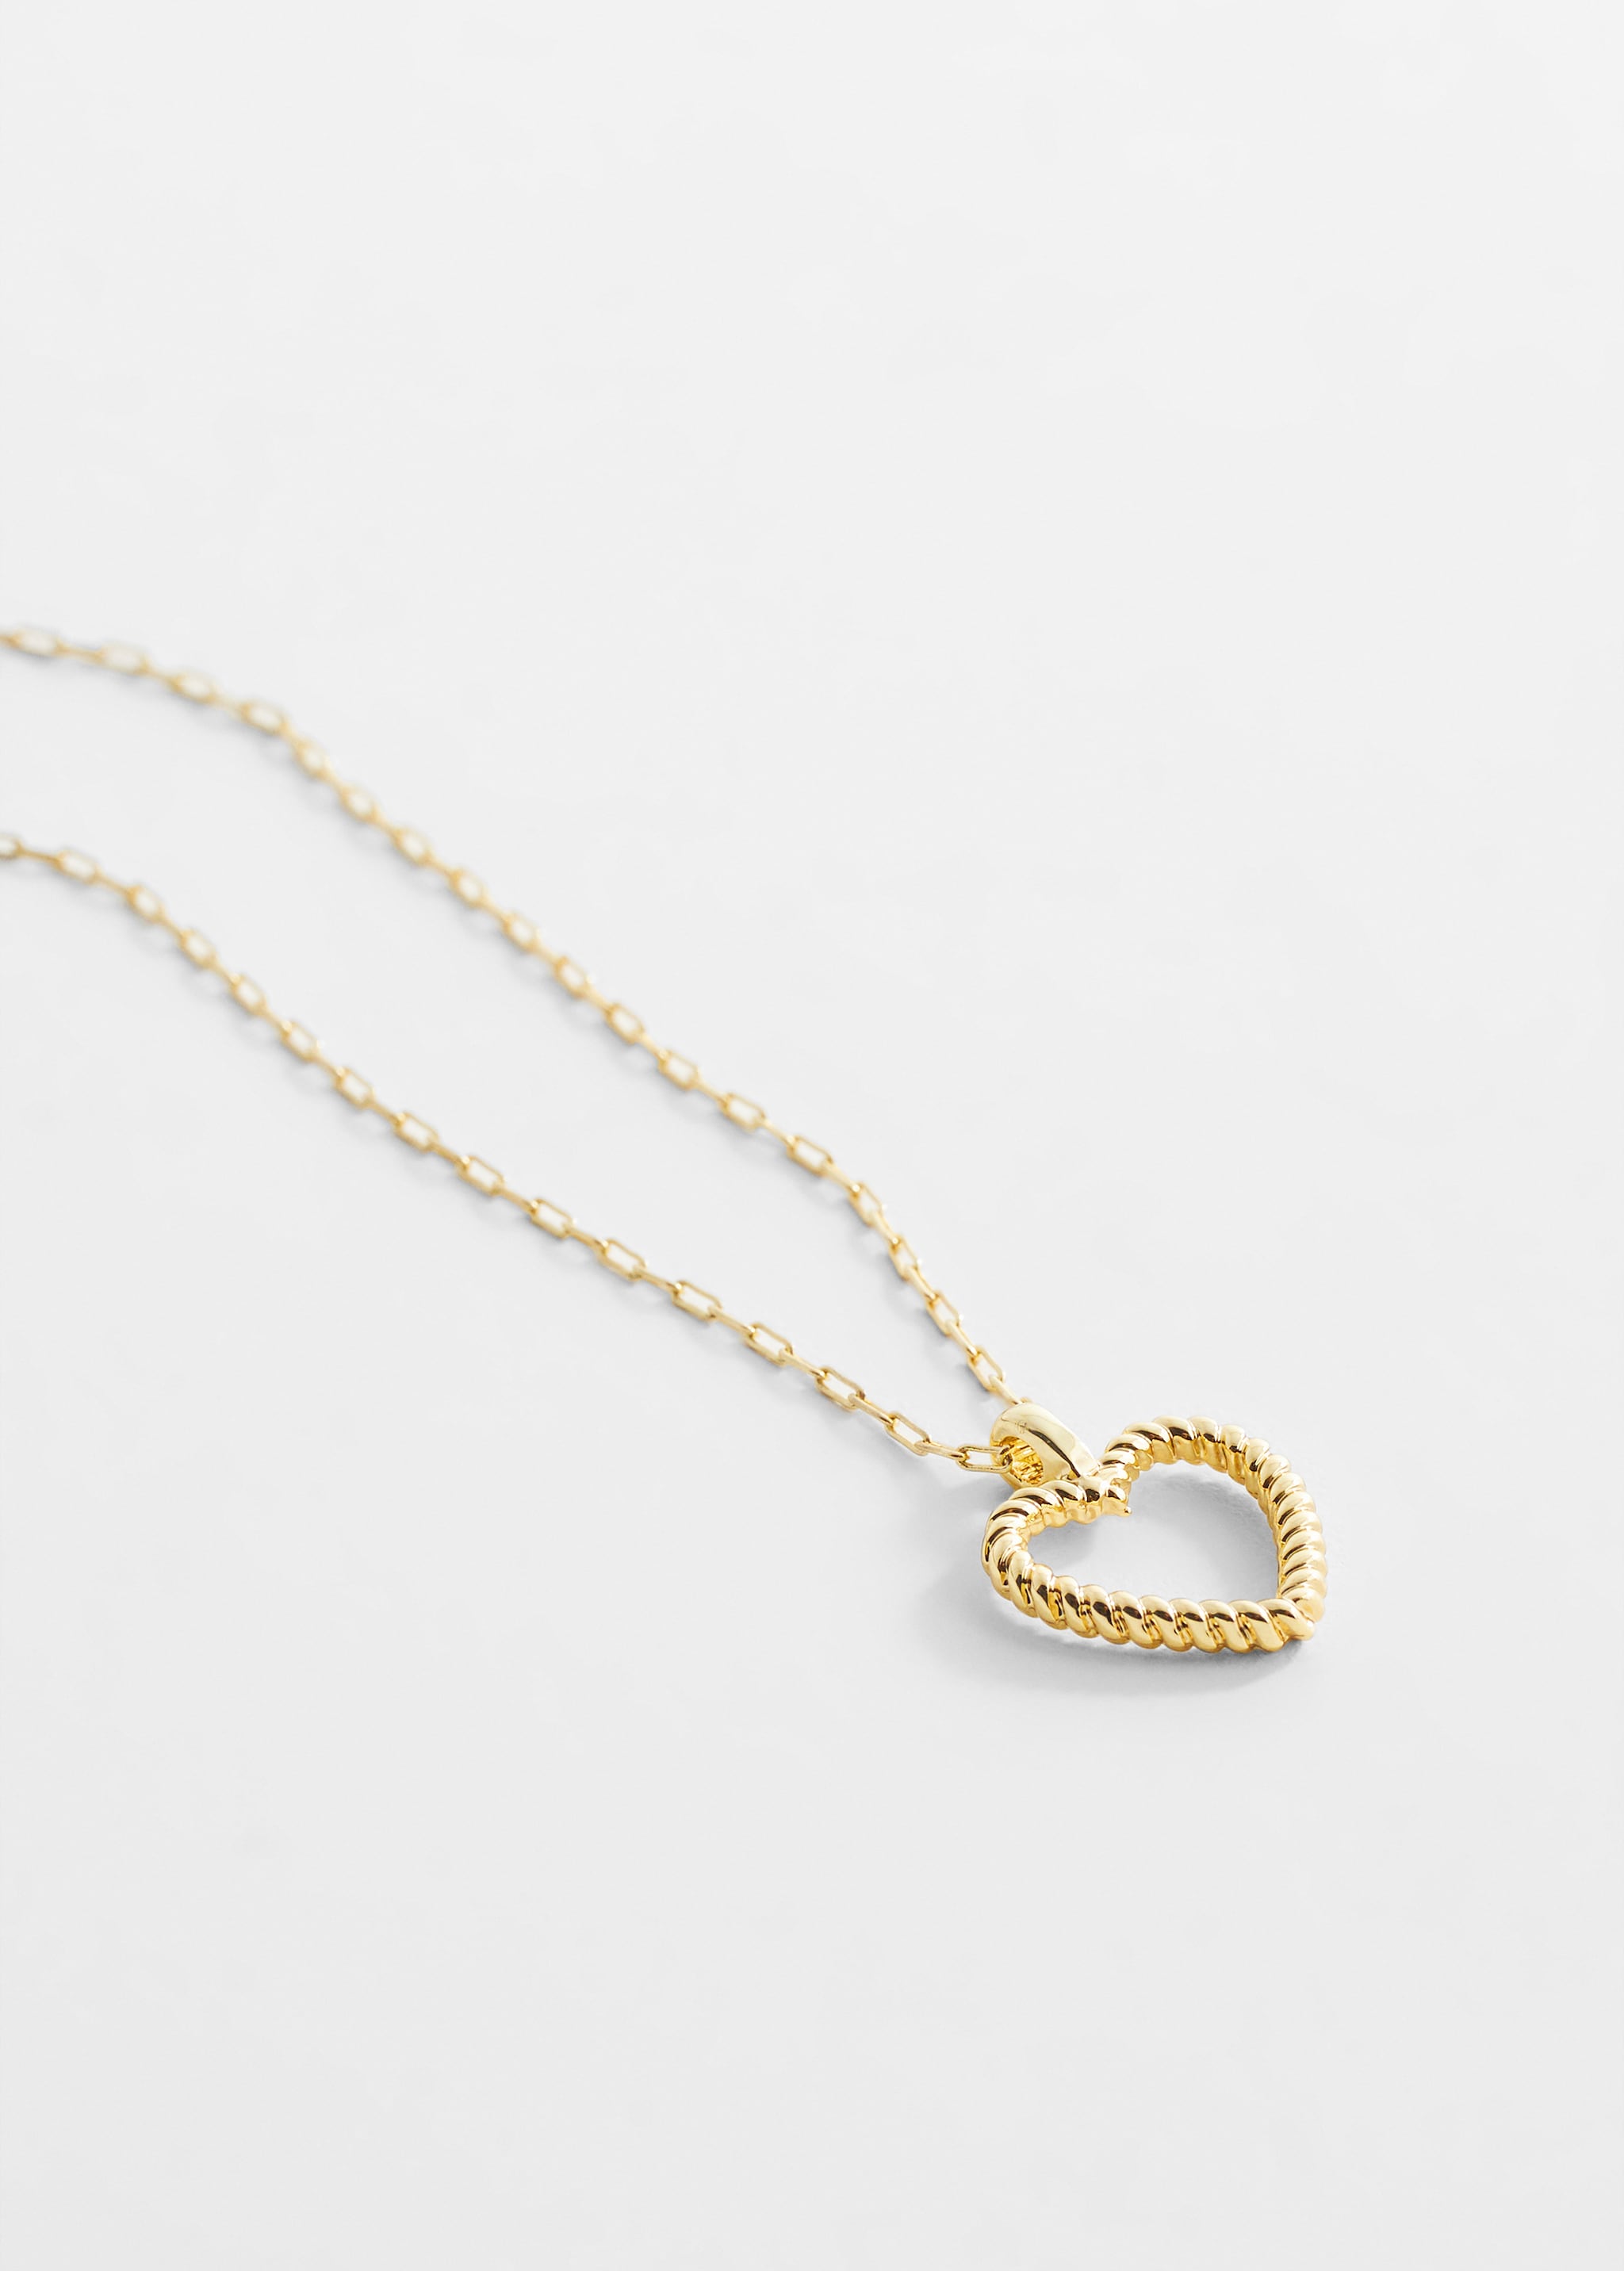 Heart pendant necklace - Medium plane